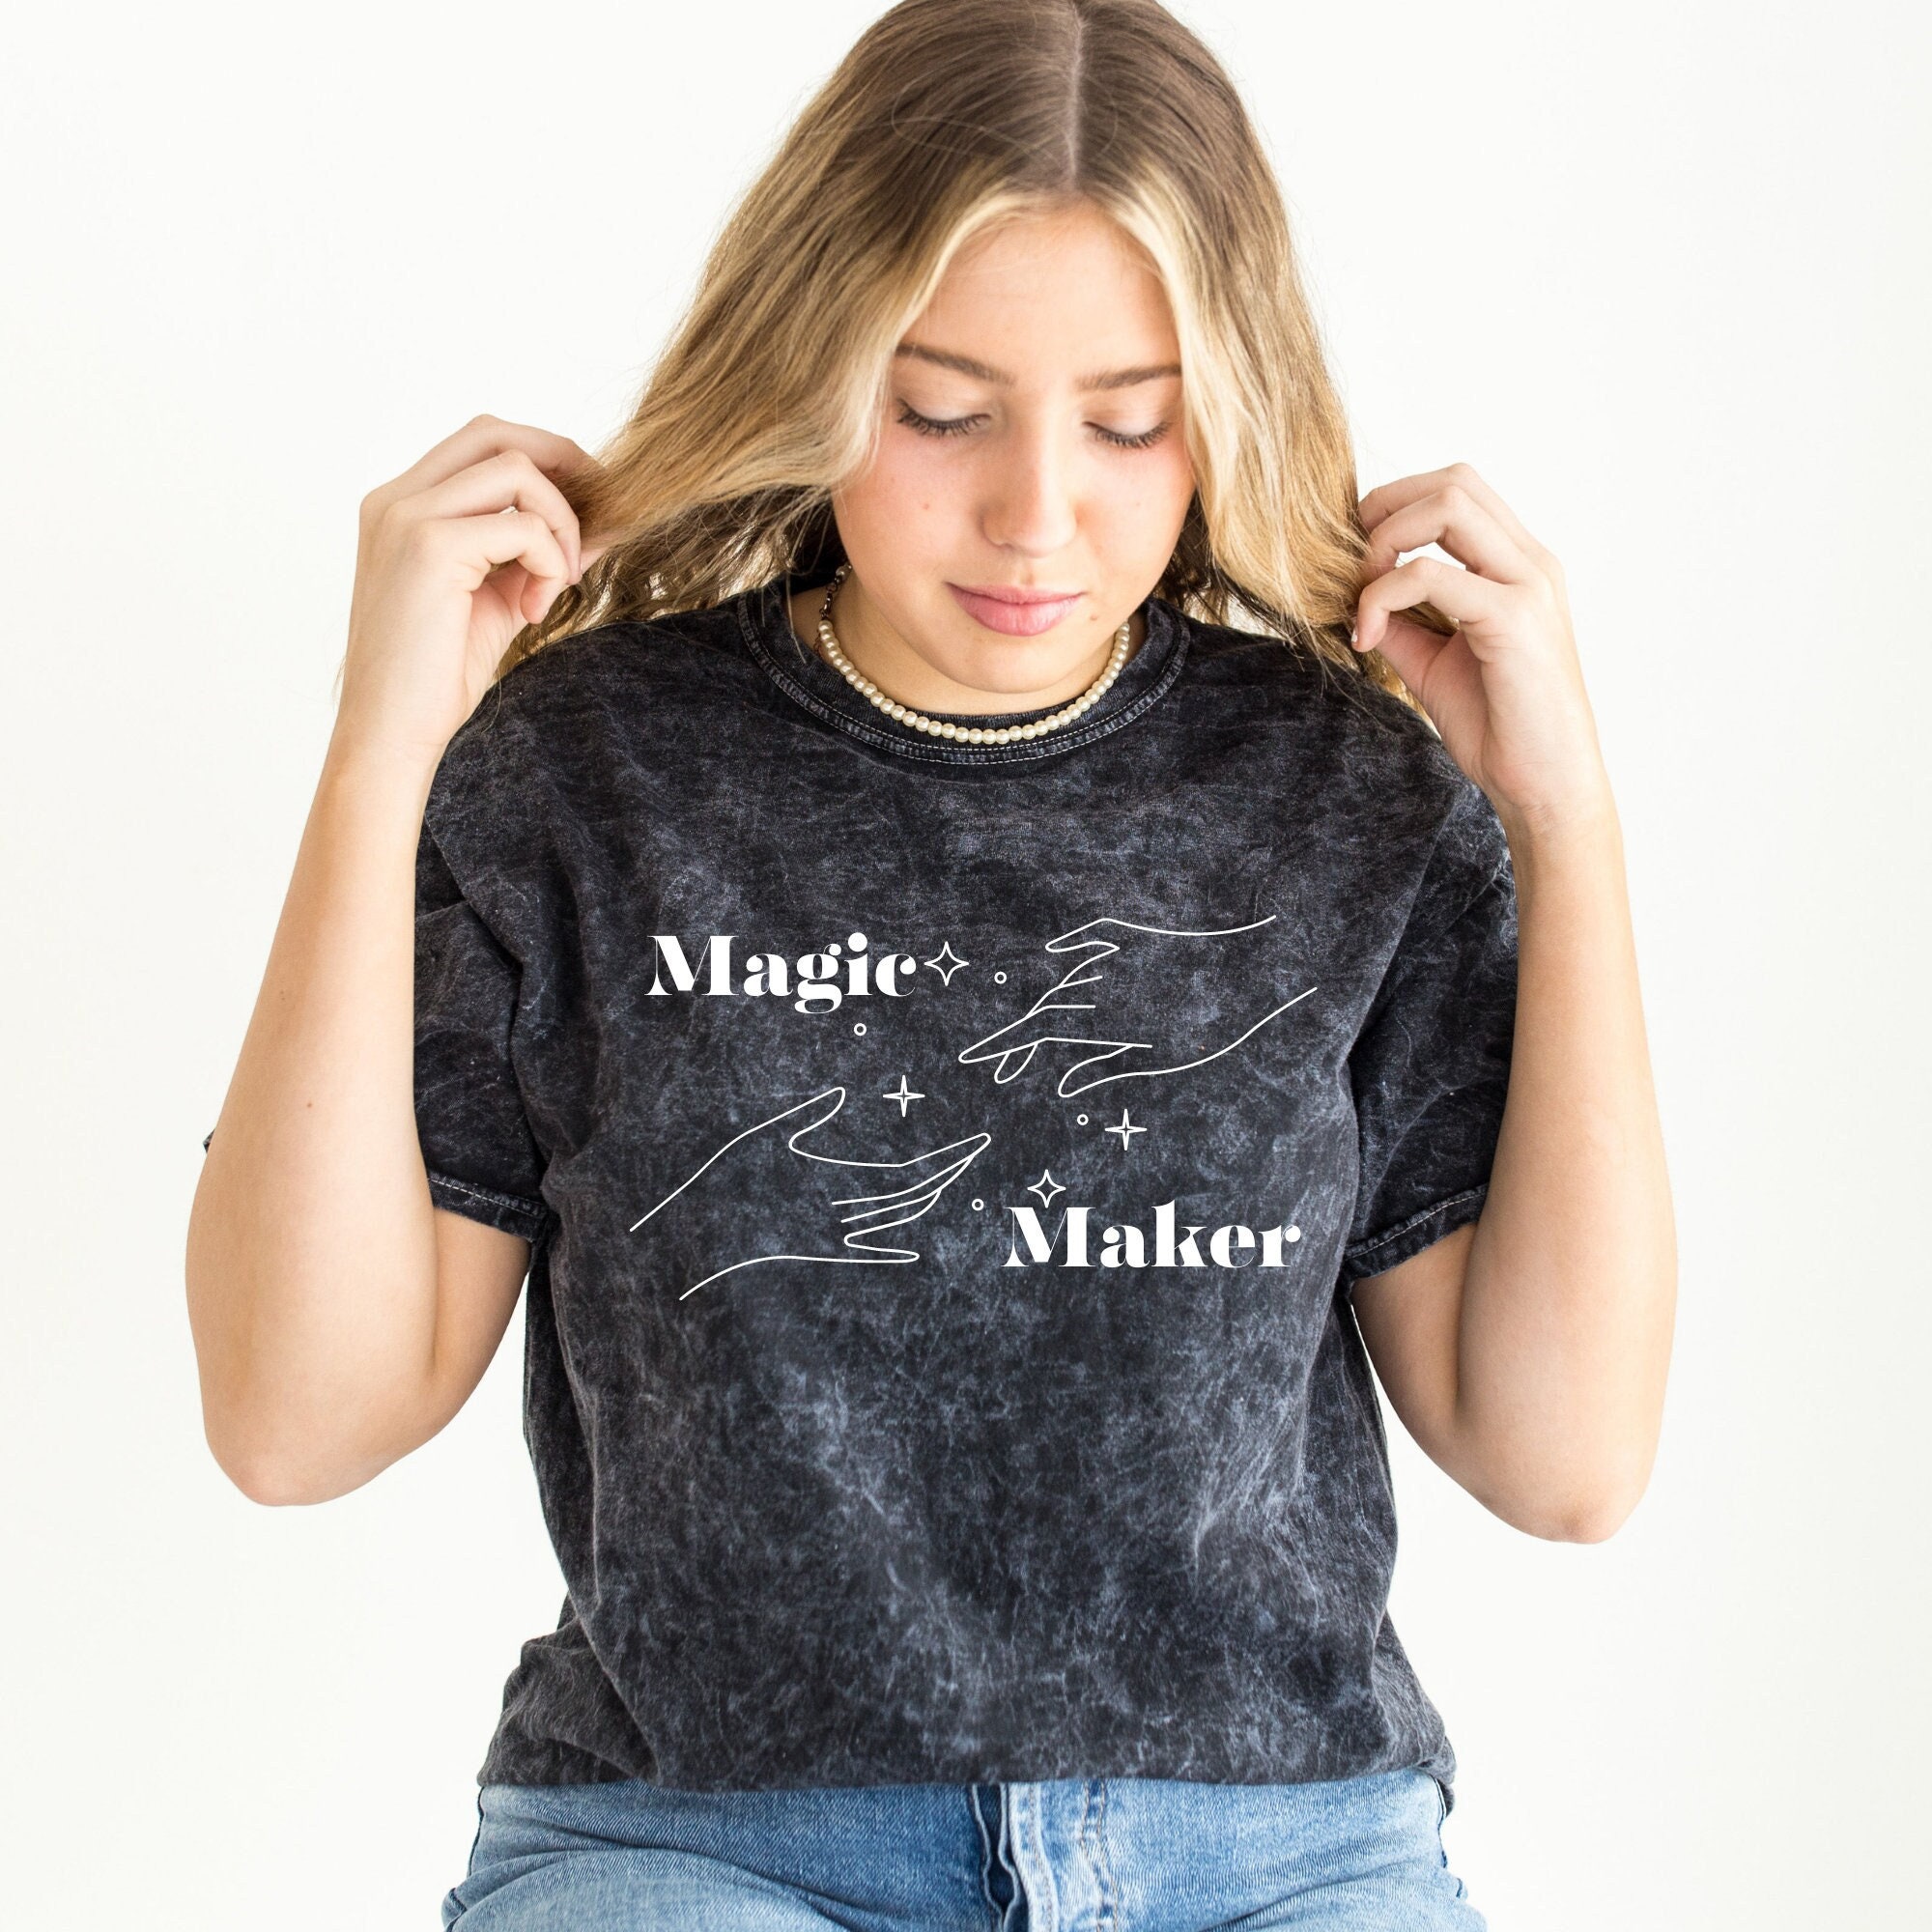 Magic Maker Shirt, Disneyland Shirt, Disney World Shirt sold by